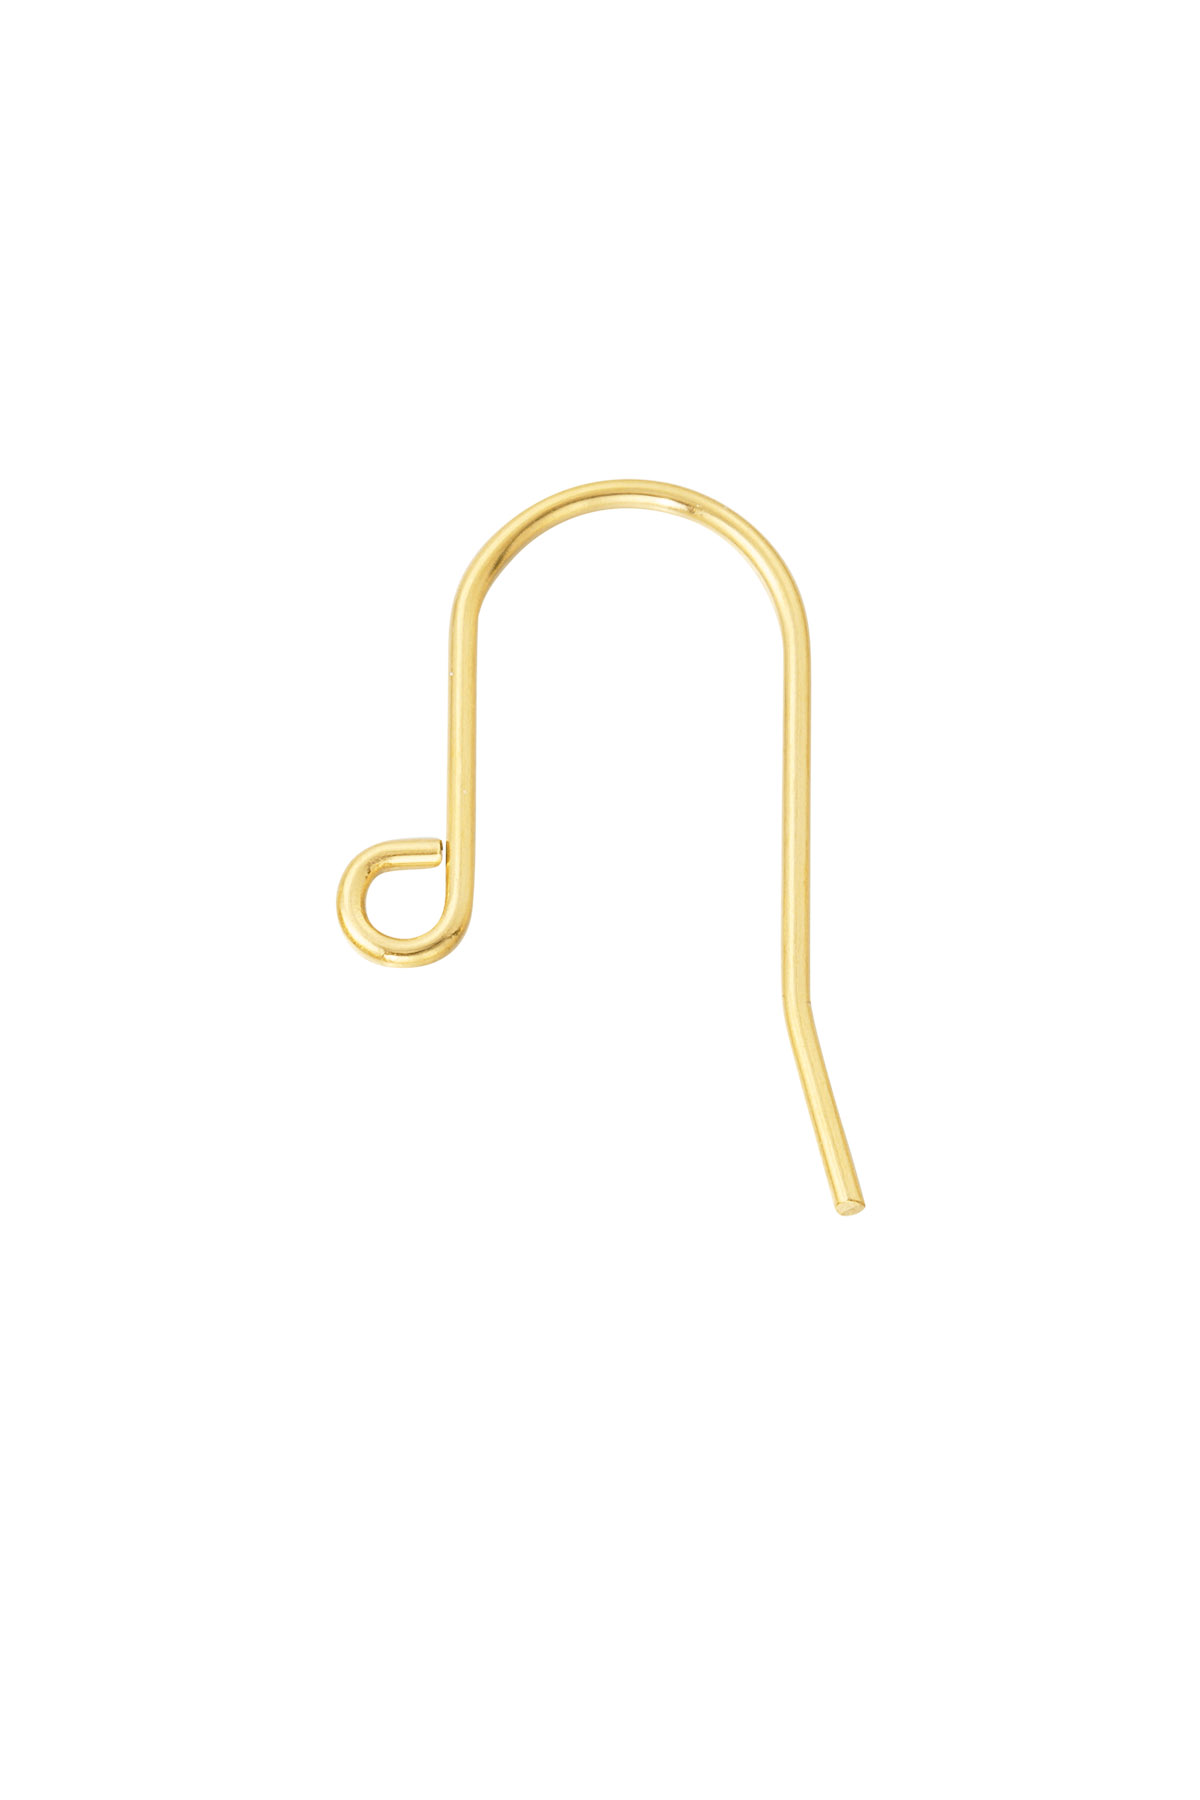 Ear hook - gold h5 